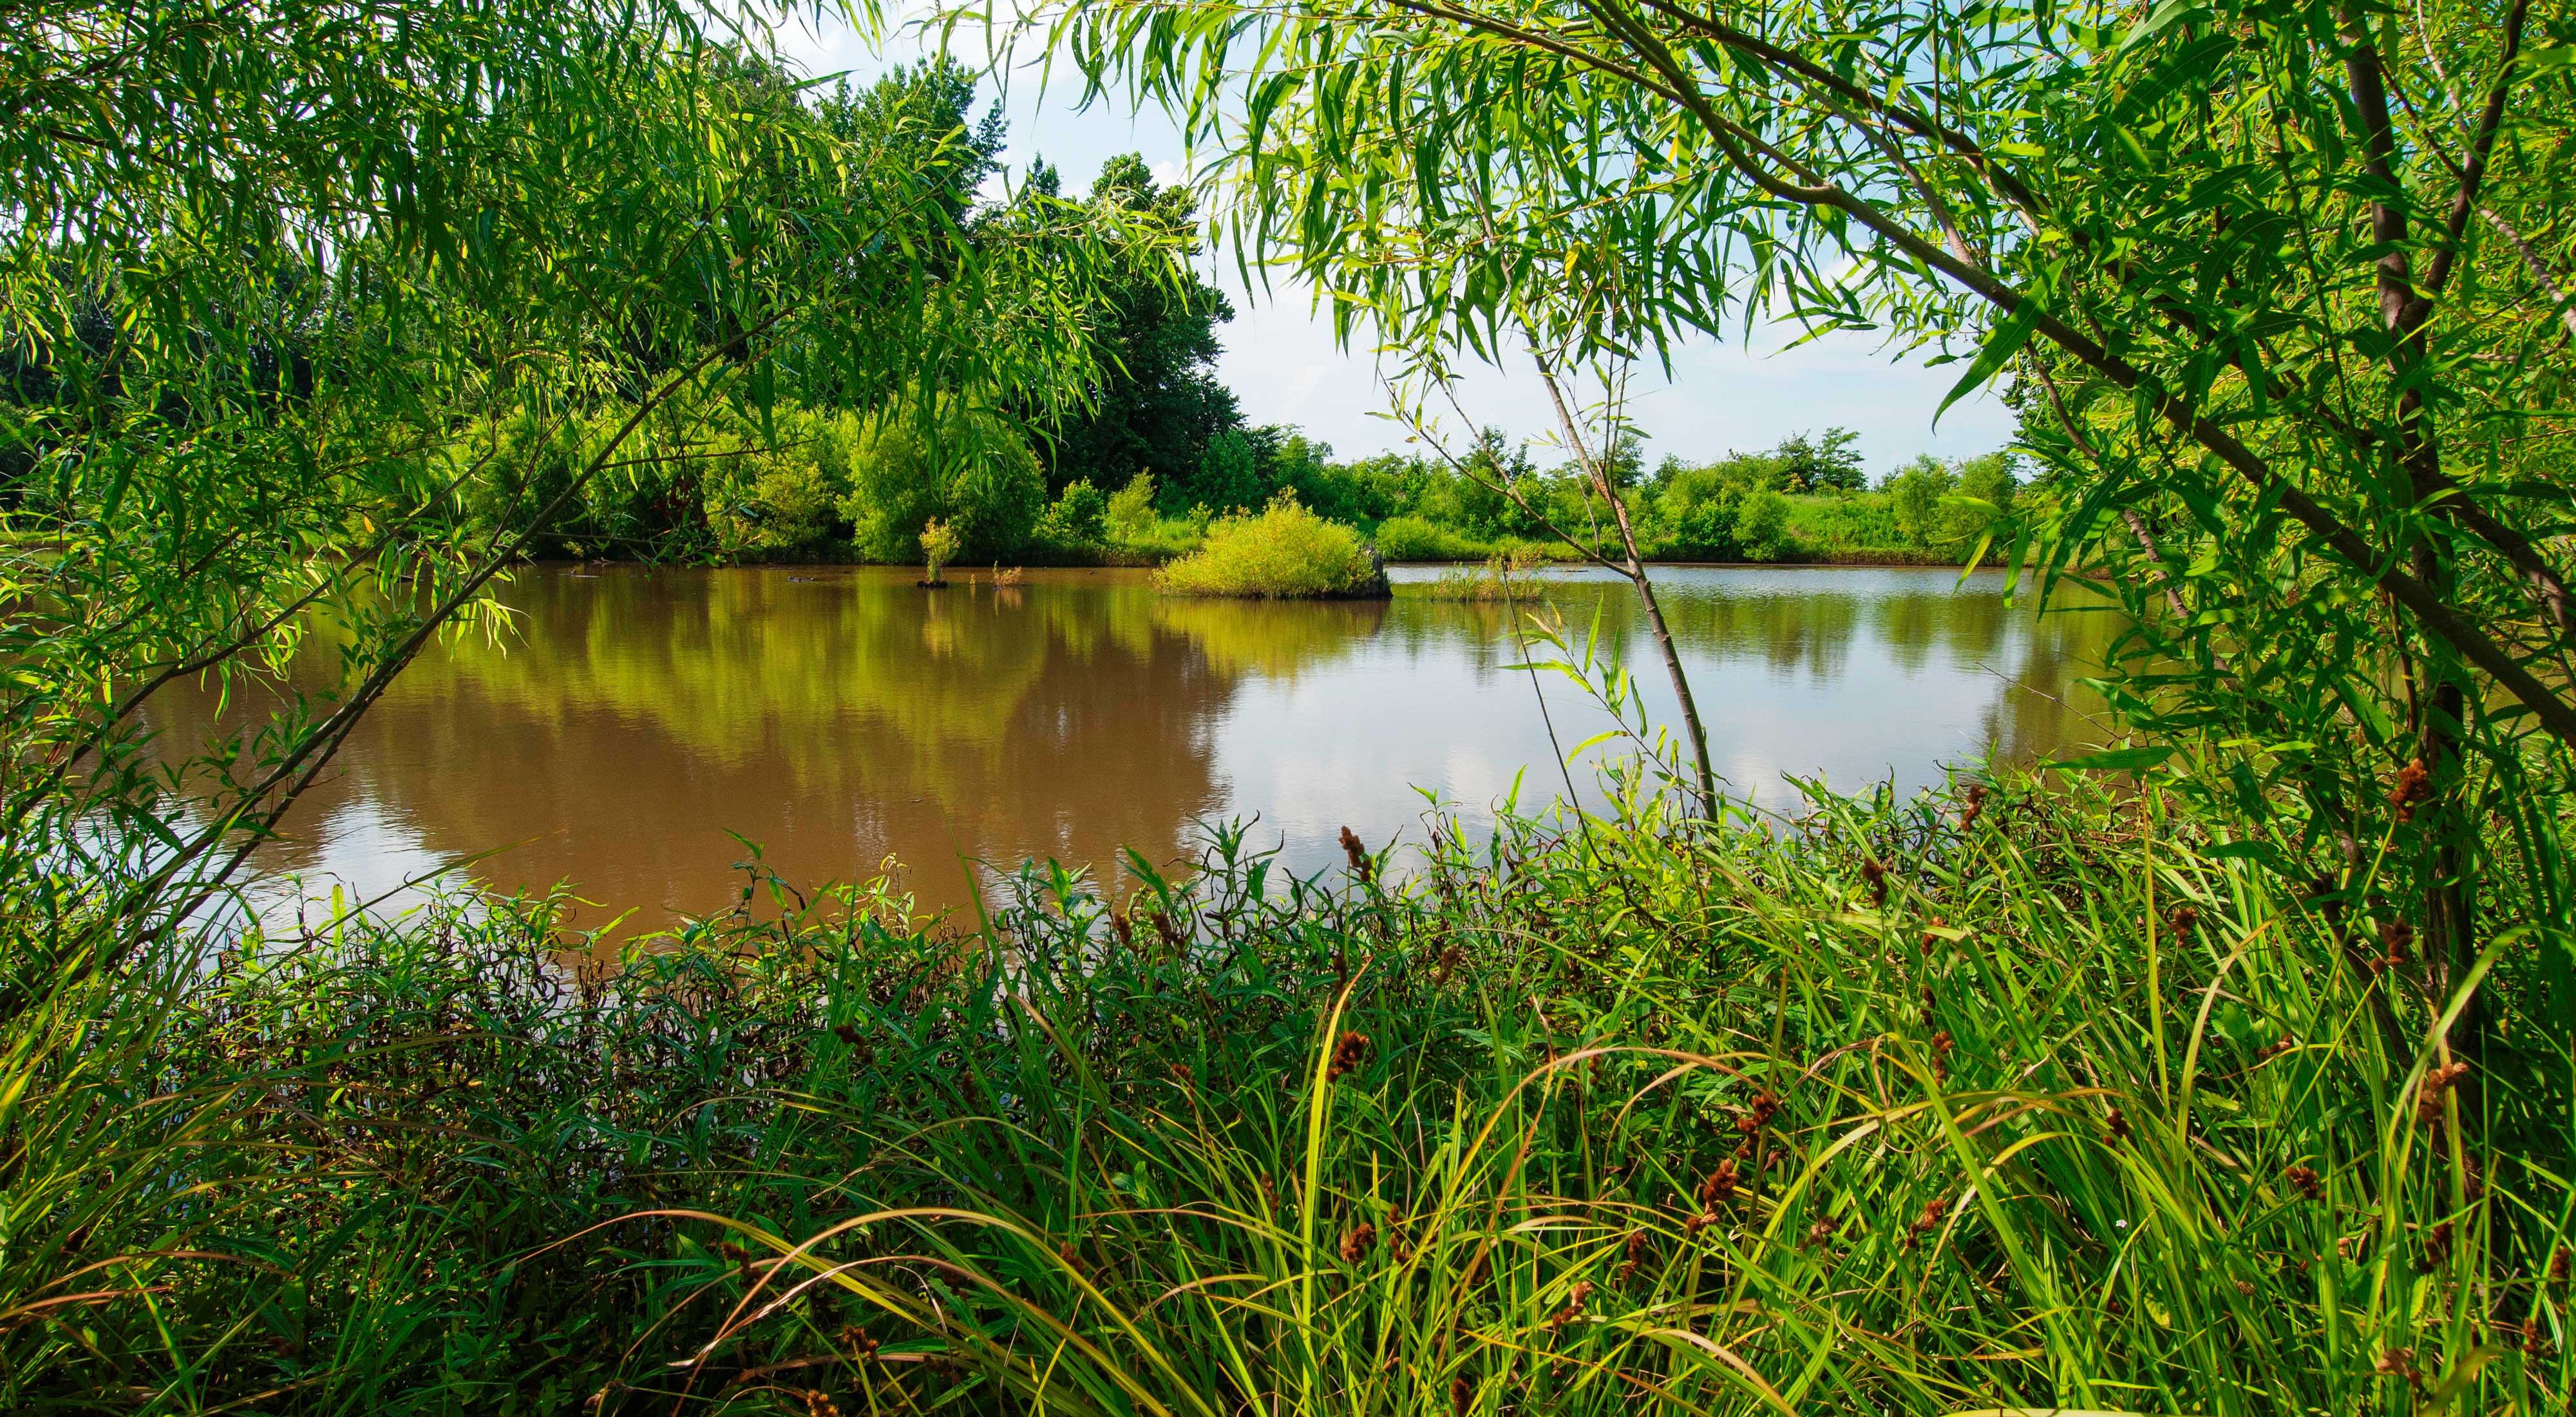 Lush vegetation frames a pond and surrounding wetlands.